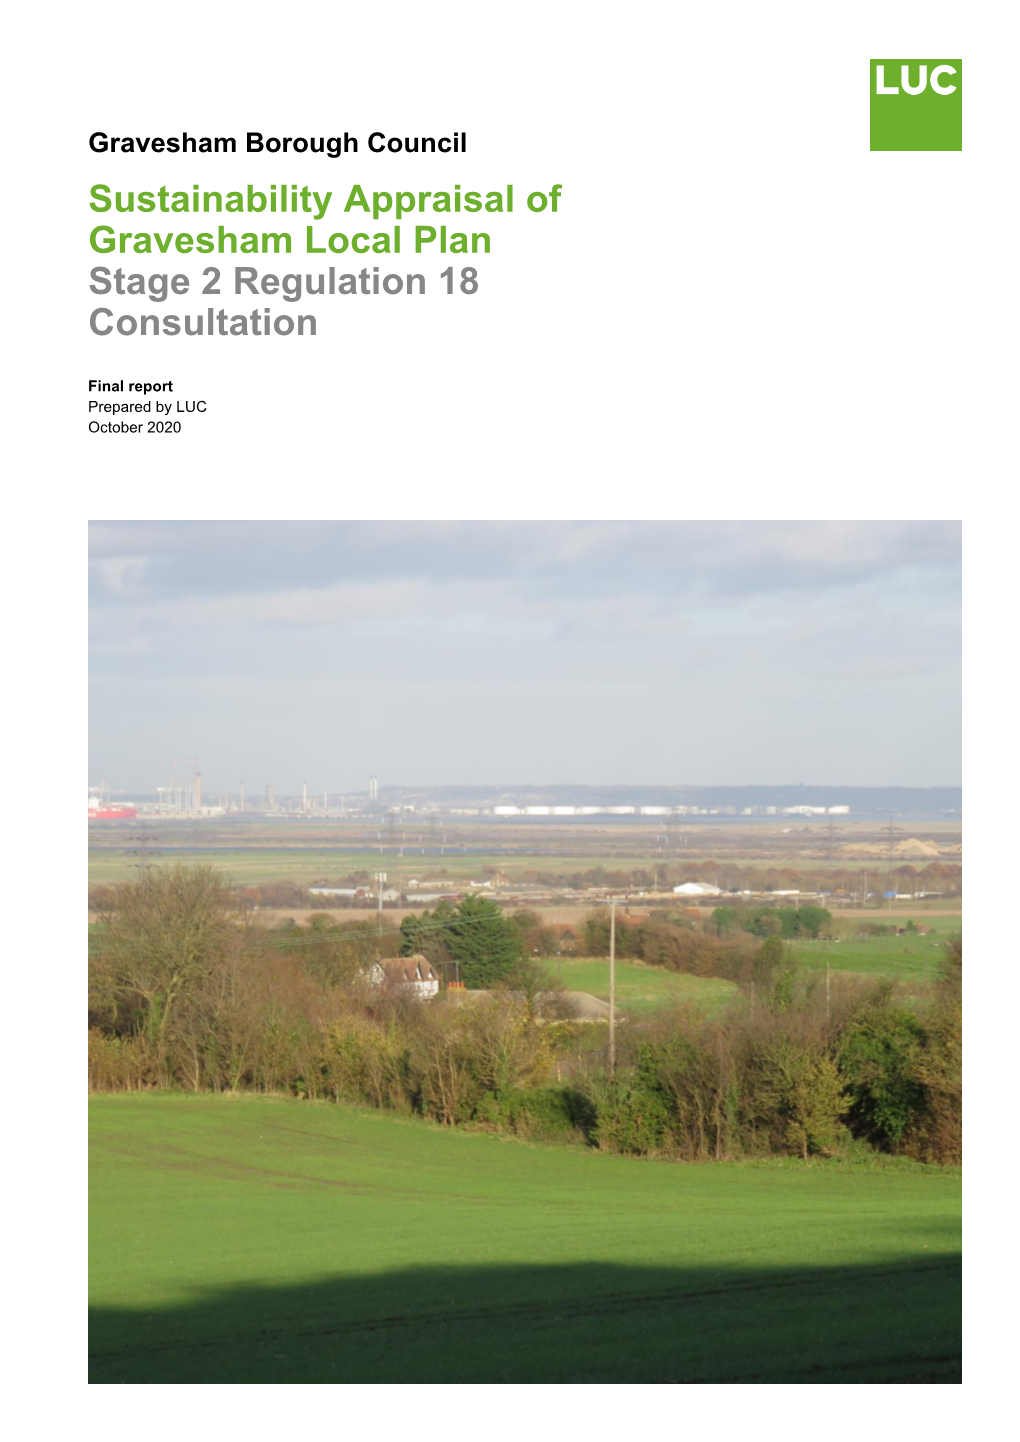 Sustainability Appraisal of Gravesham Local Plan Stage 2 Regulation 18 Consultation